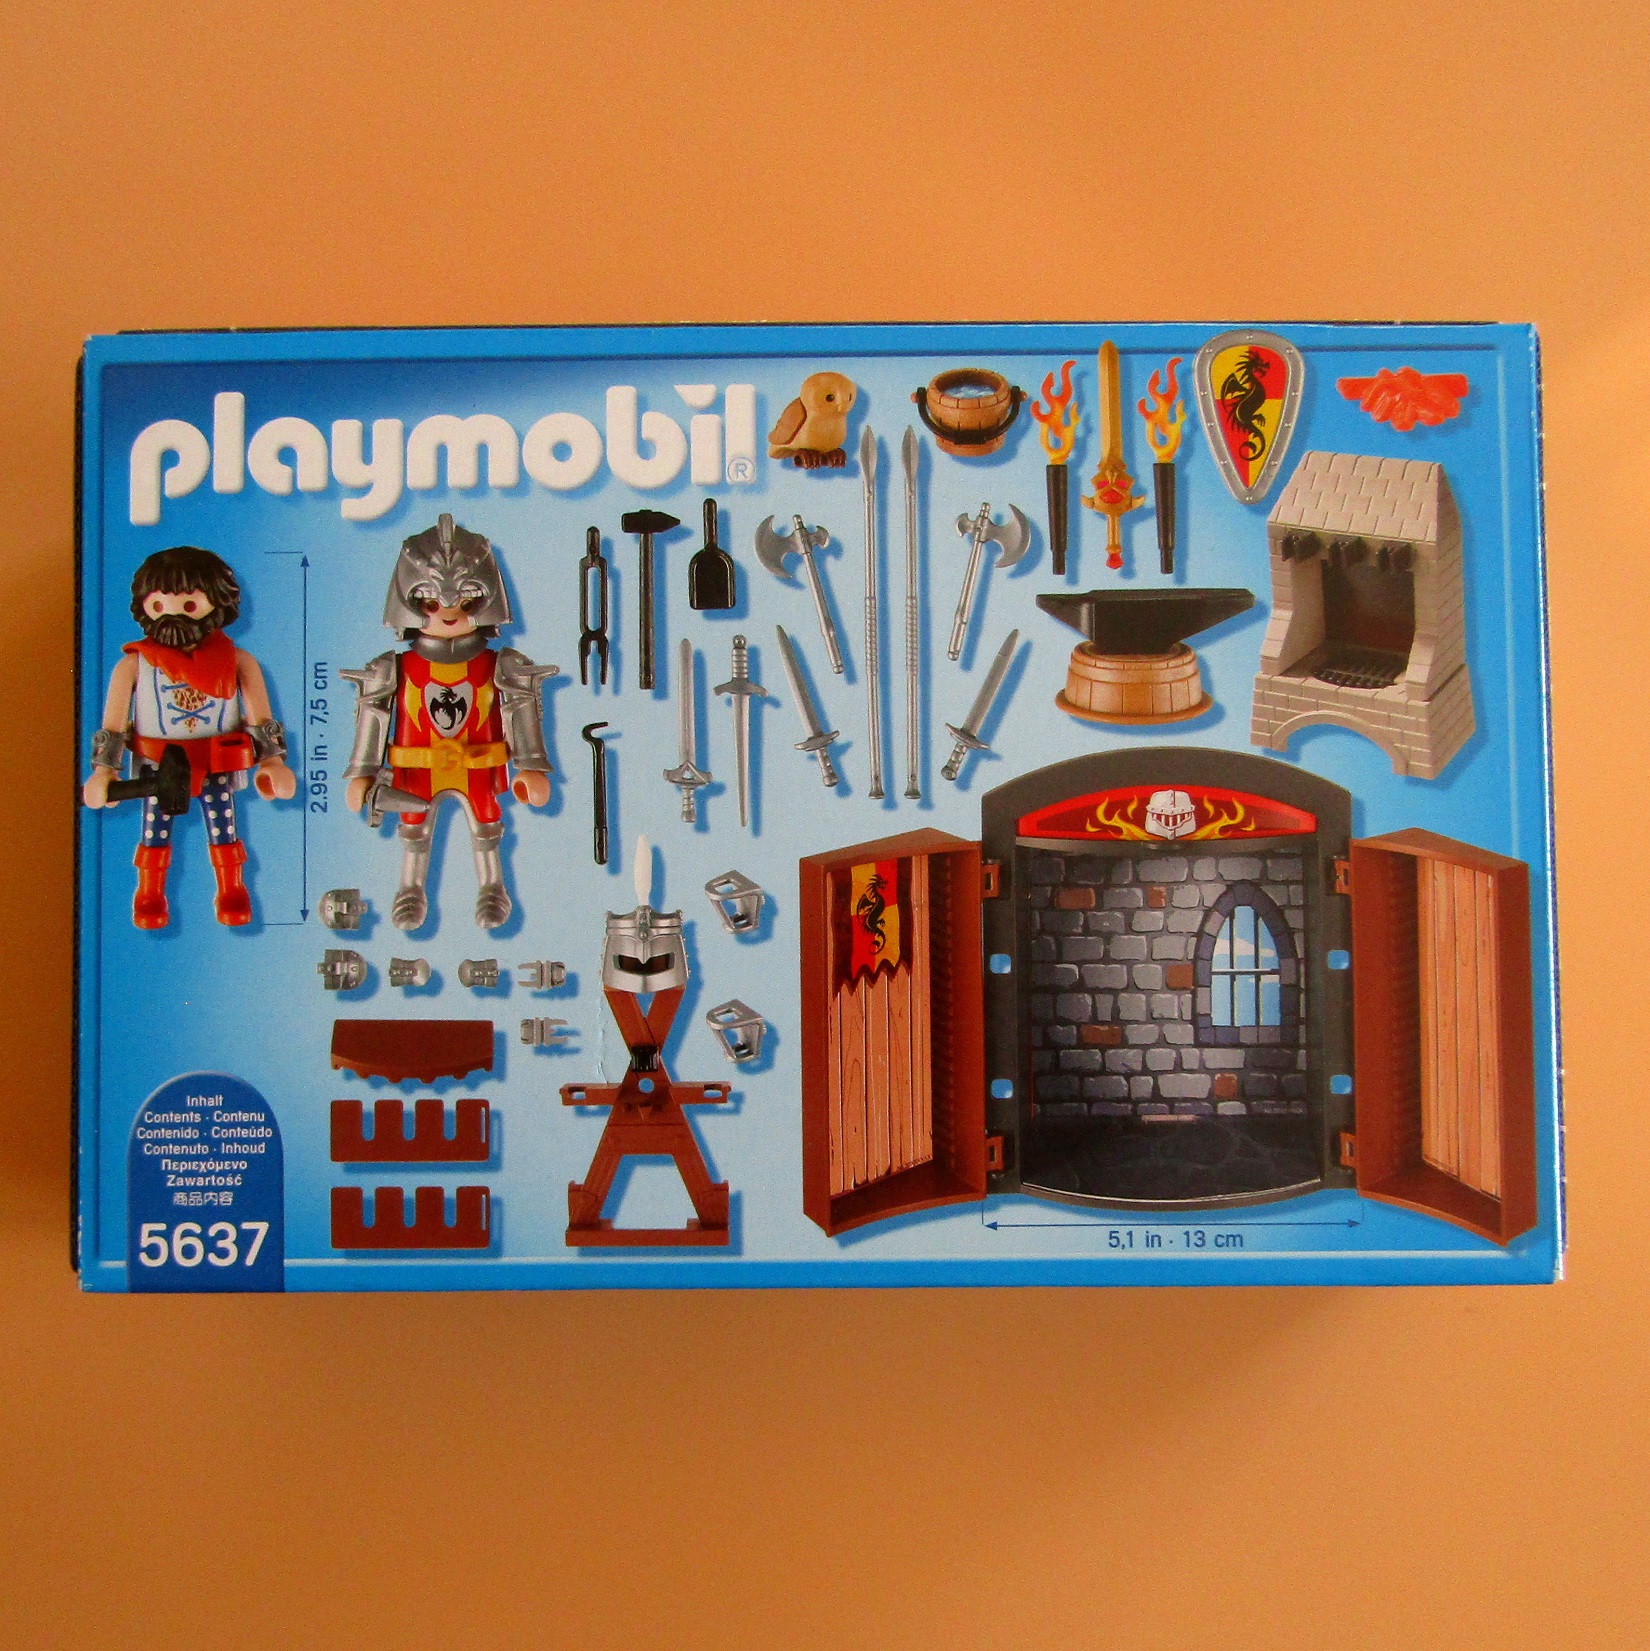 Playmobil Knights 5637 pas cher, Coffre Chevalier et forgeron